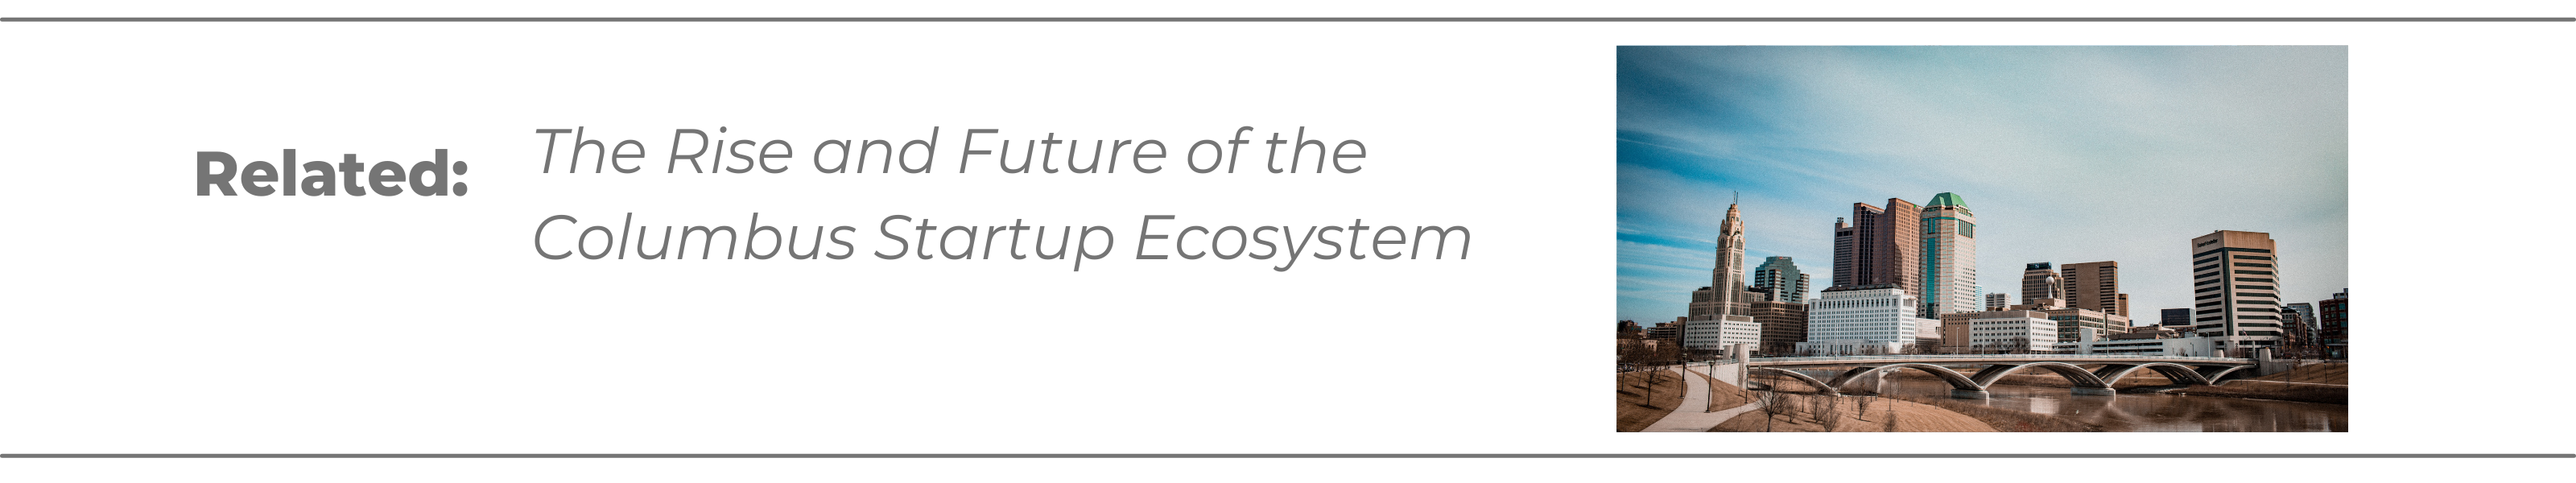 rise-of-Columbus-startup-ecosystem